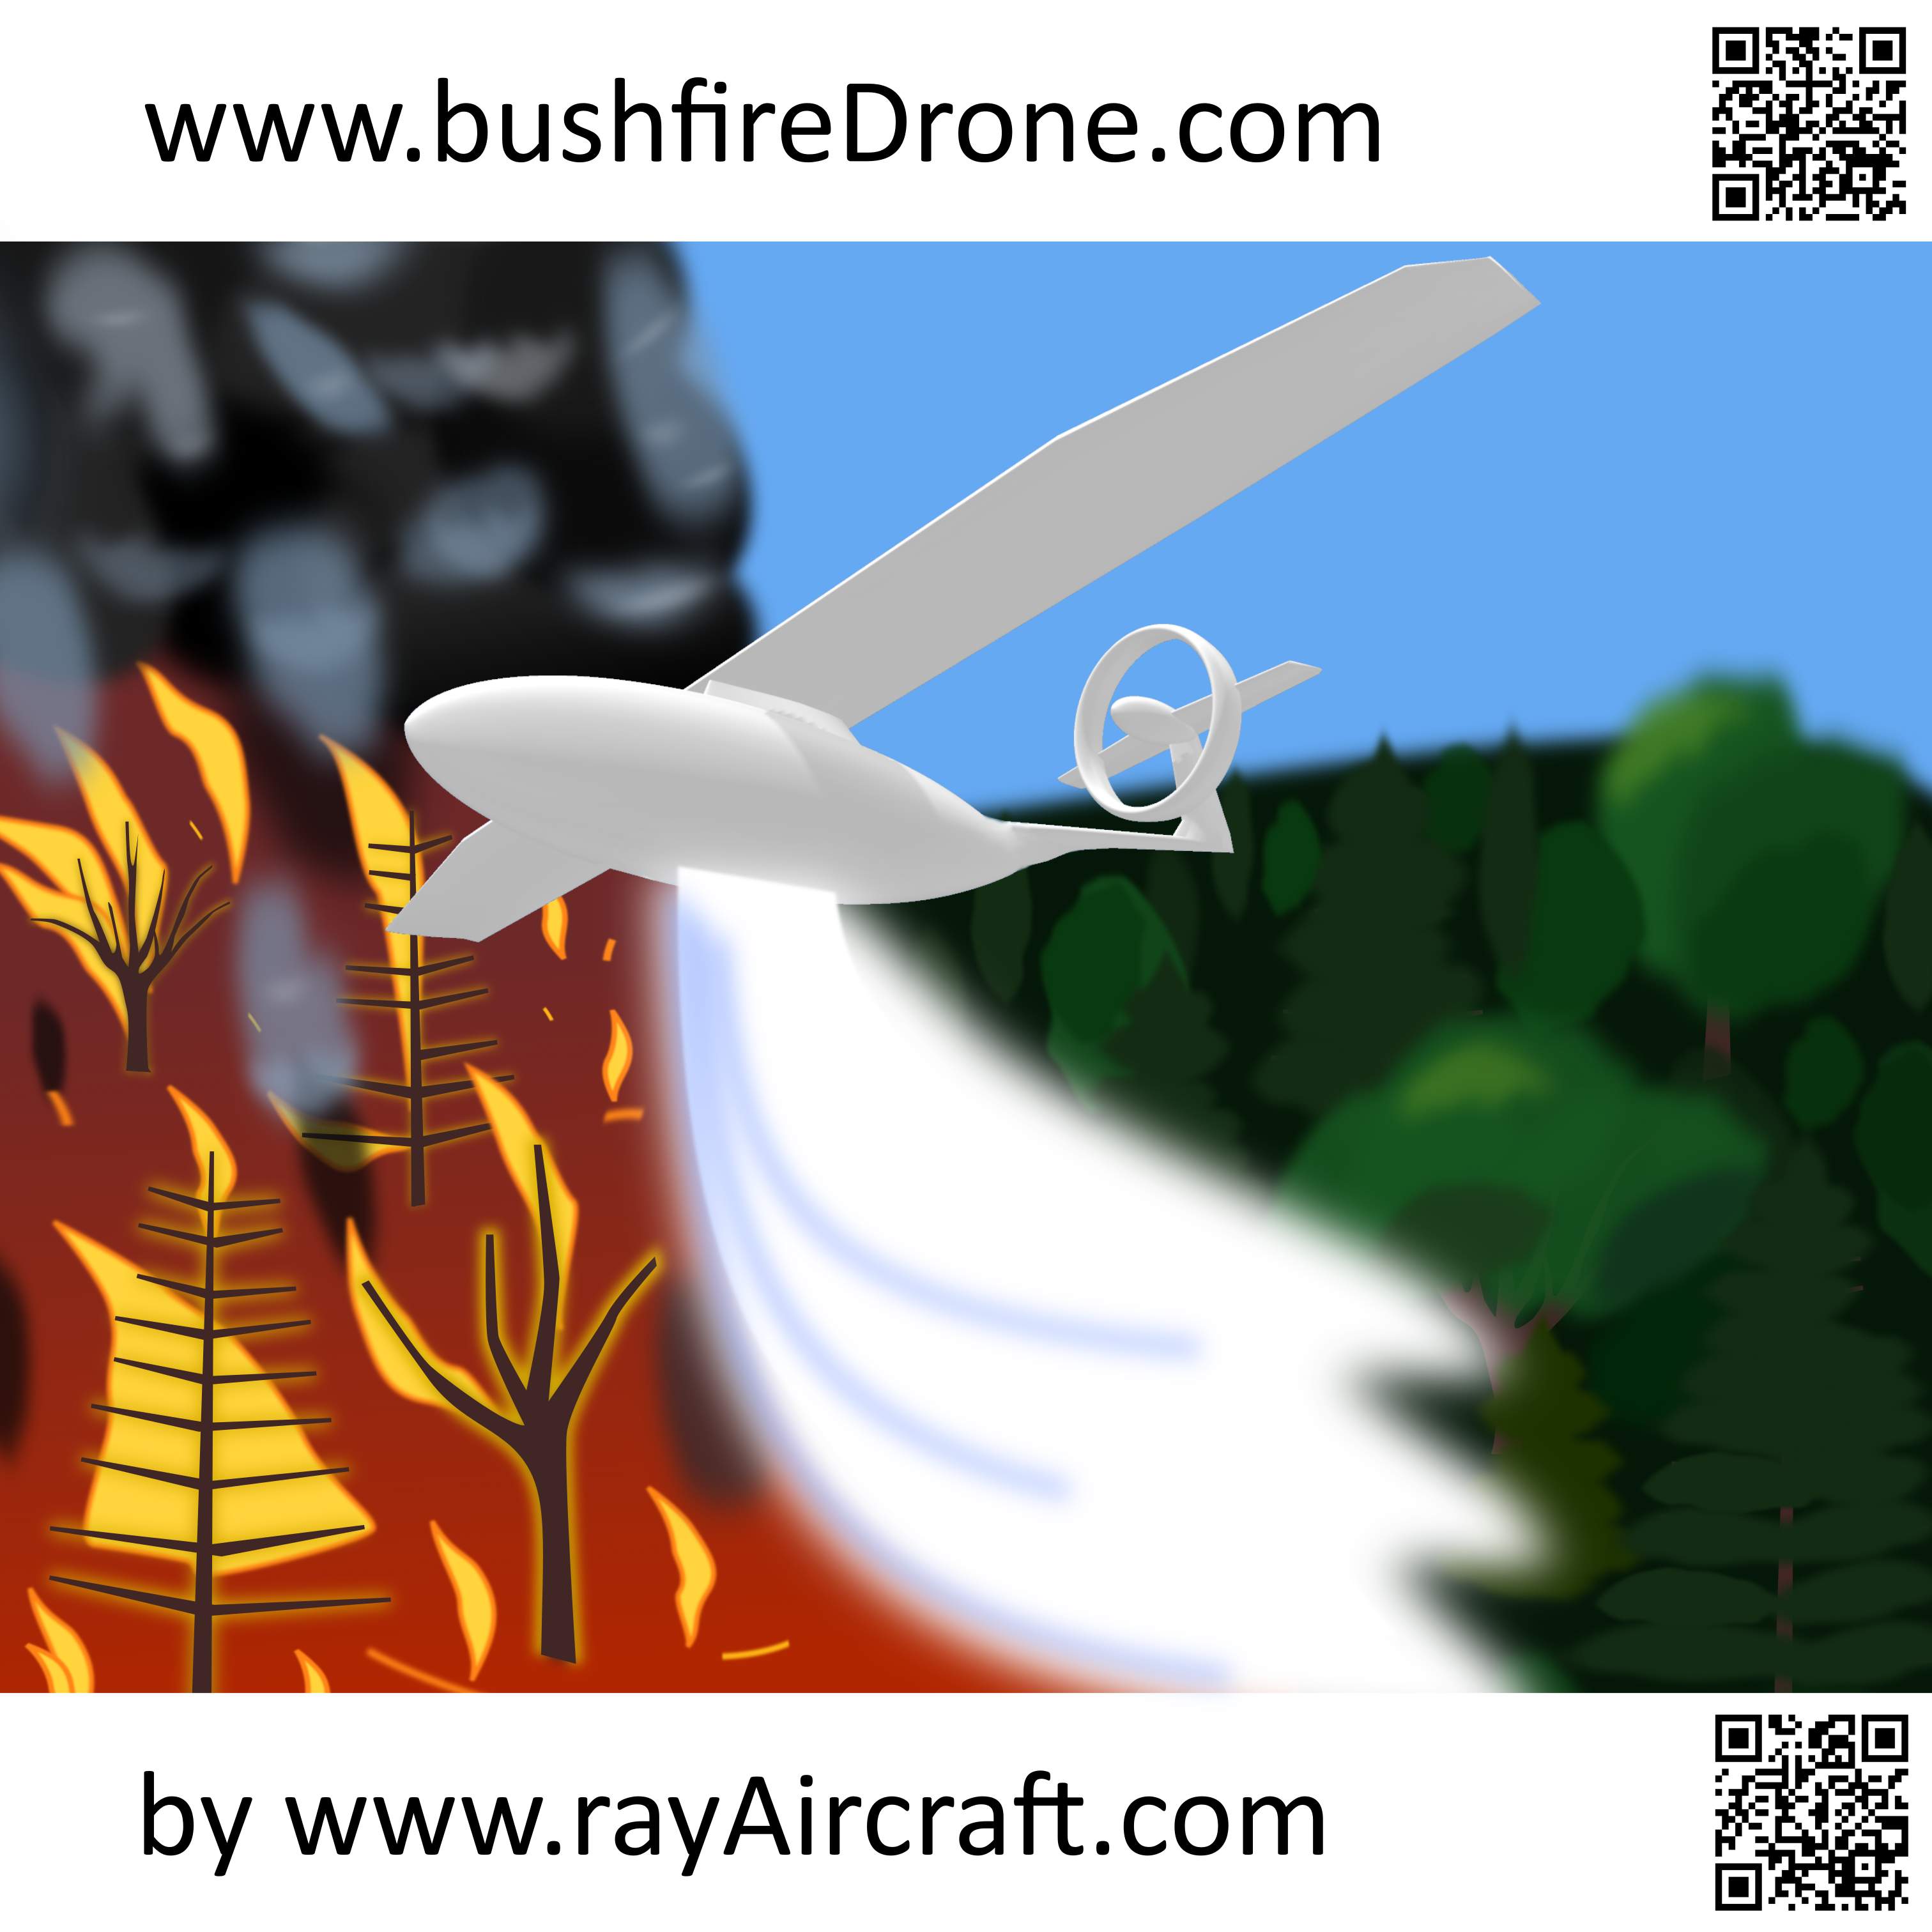 Bush fire drone - forest fire fighting